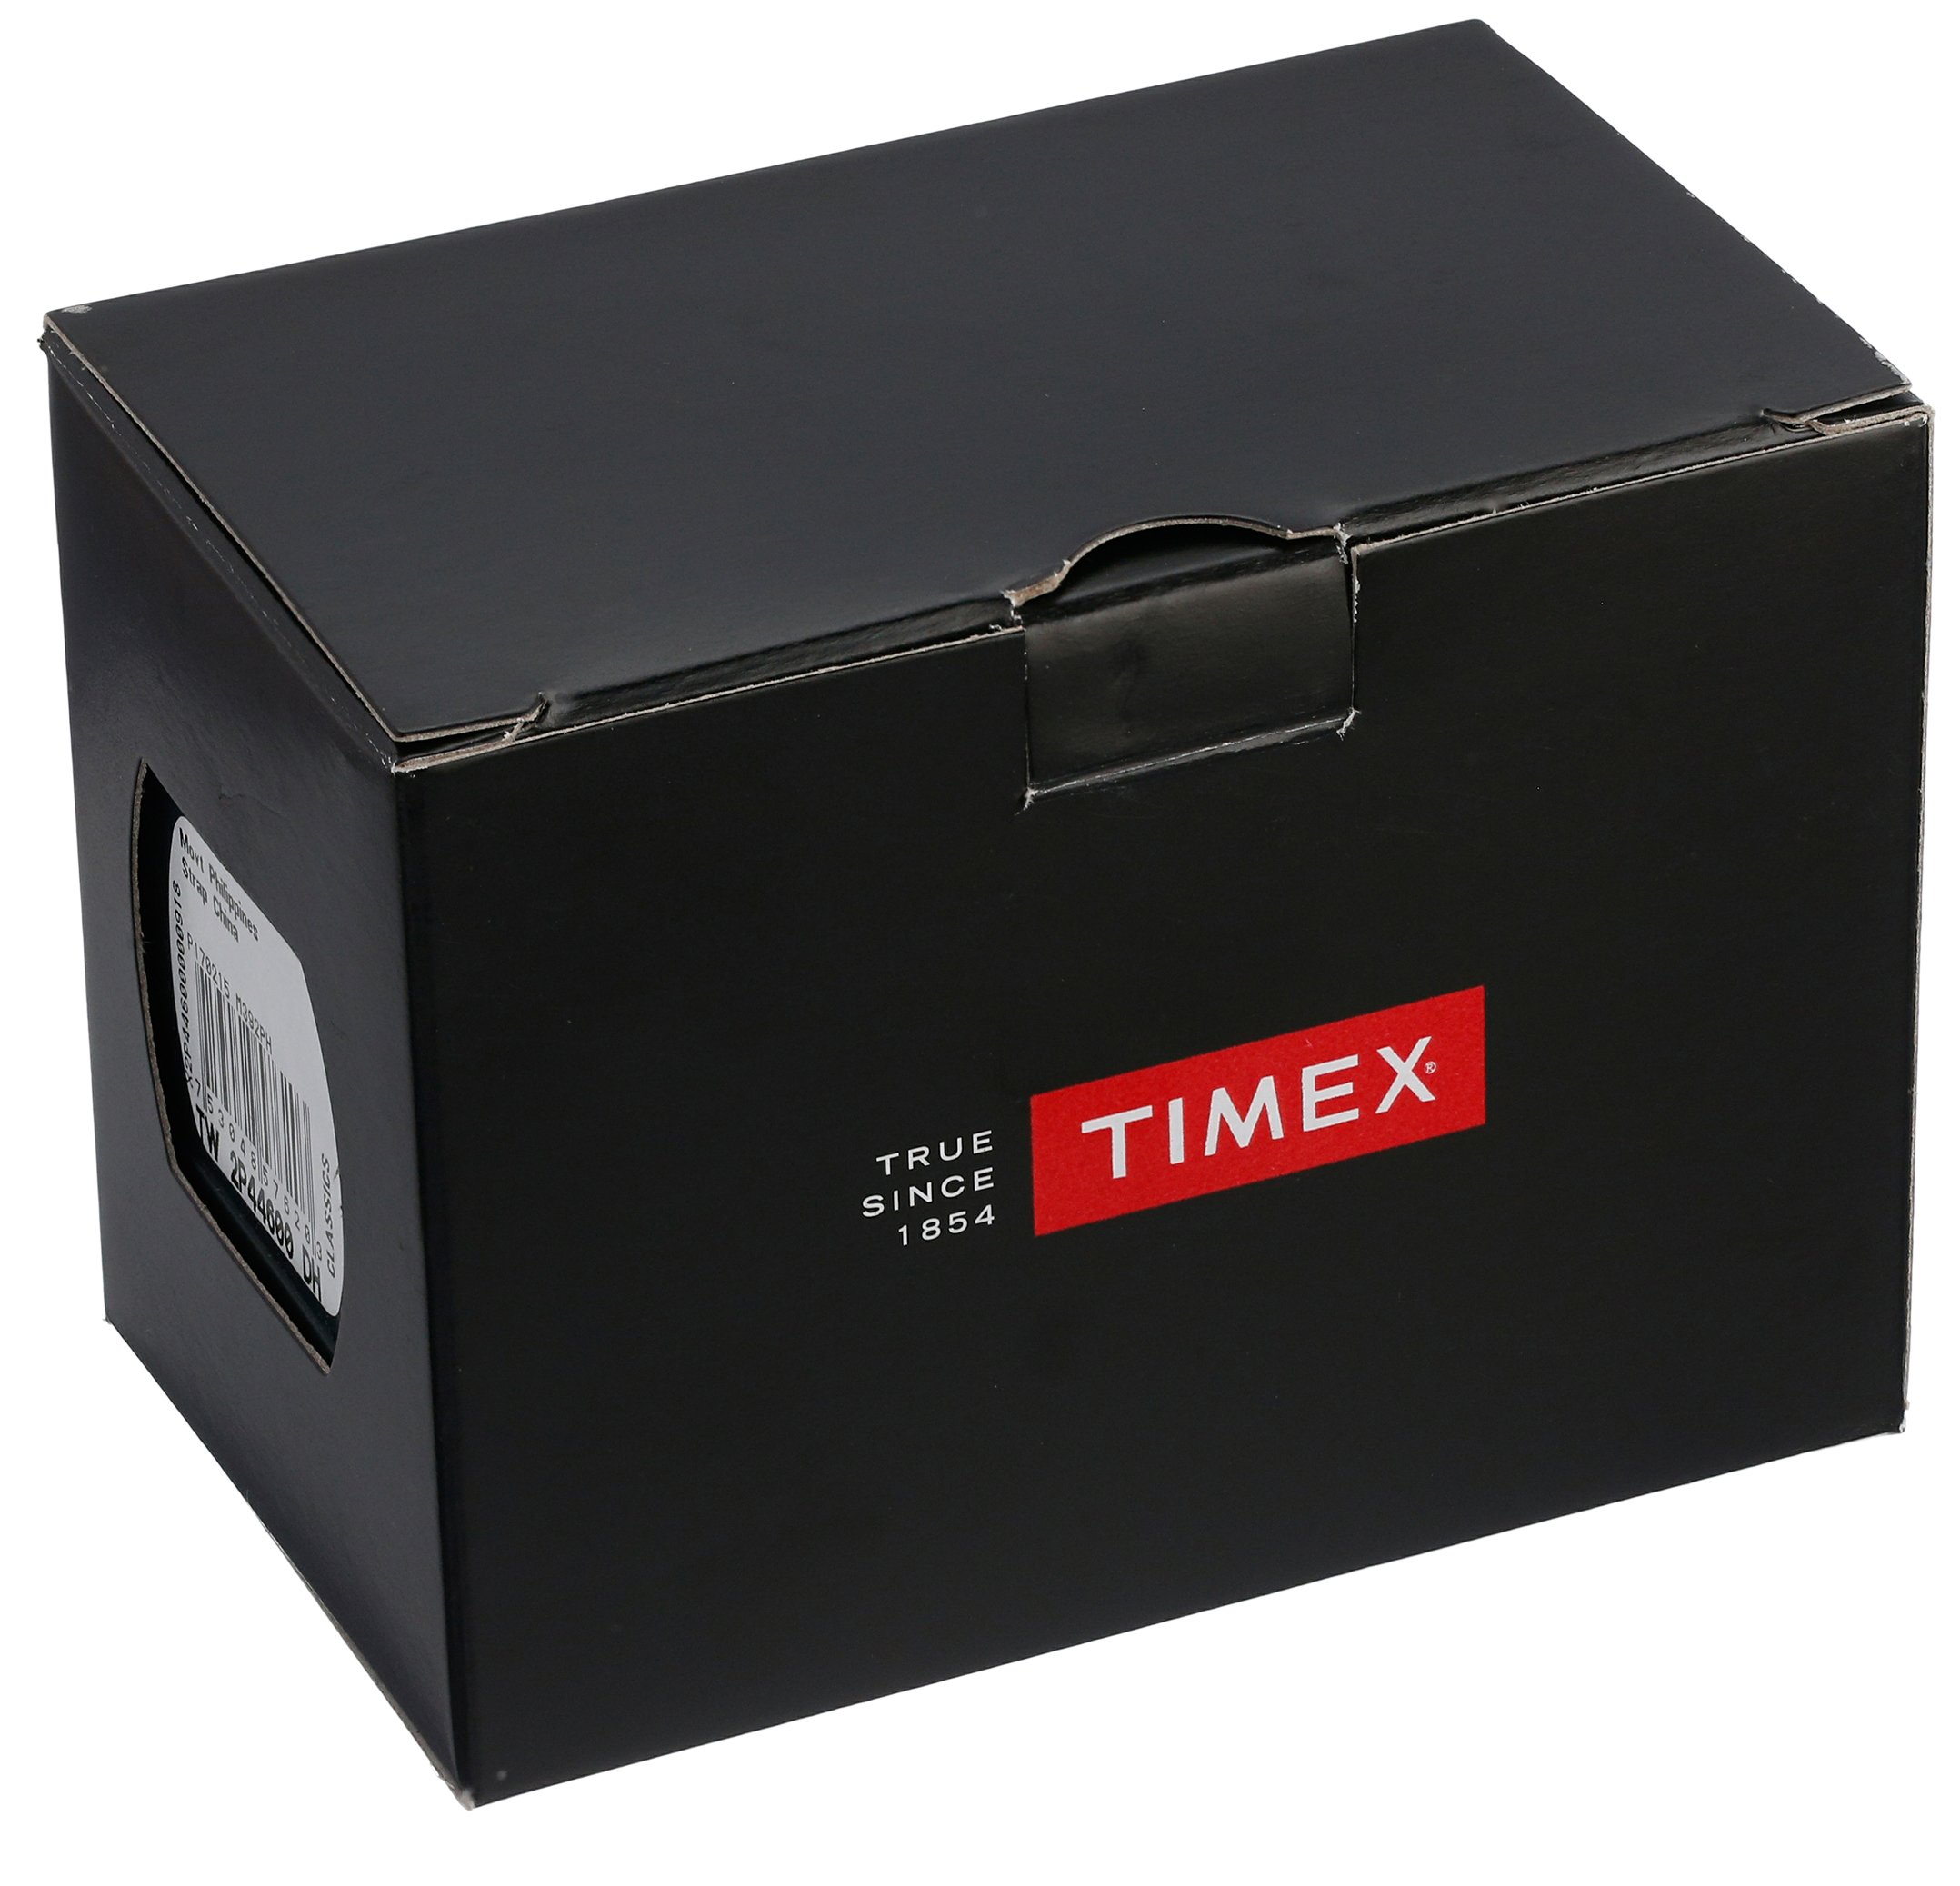 Timex Women's Expedition Metal Field Mini Watch